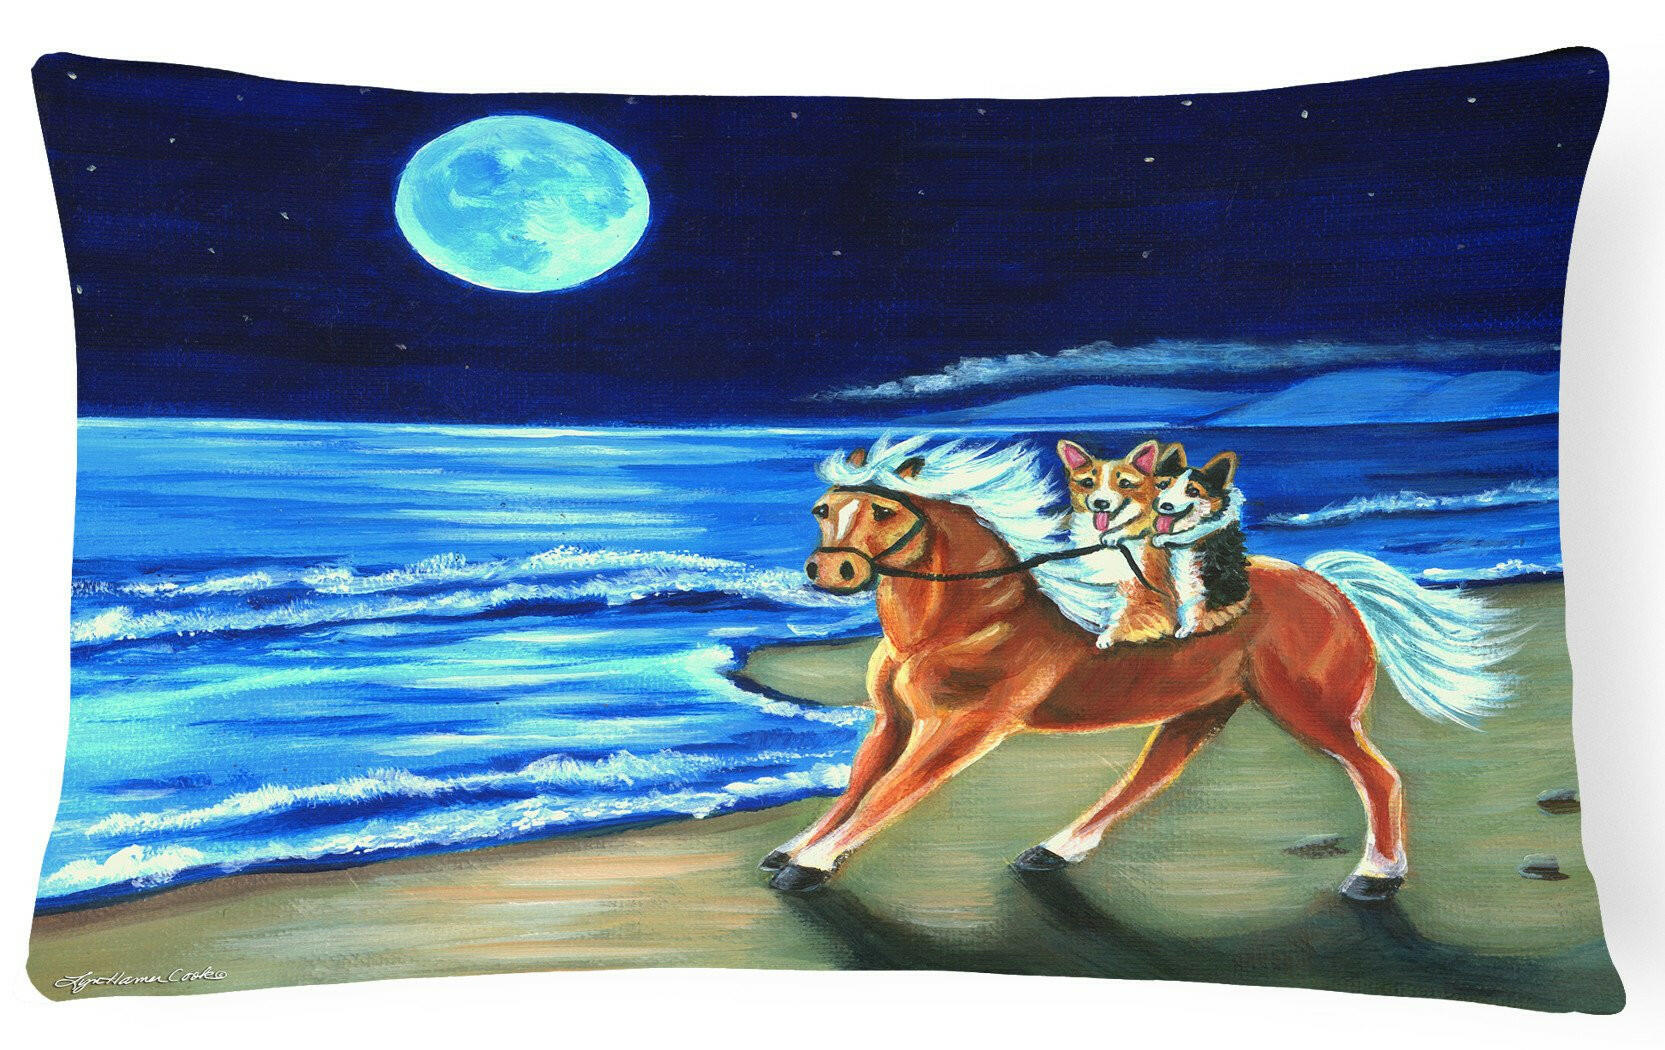 Corgi Beach Ride on Horse Fabric Decorative Pillow 7318PW1216 by Caroline's Treasures